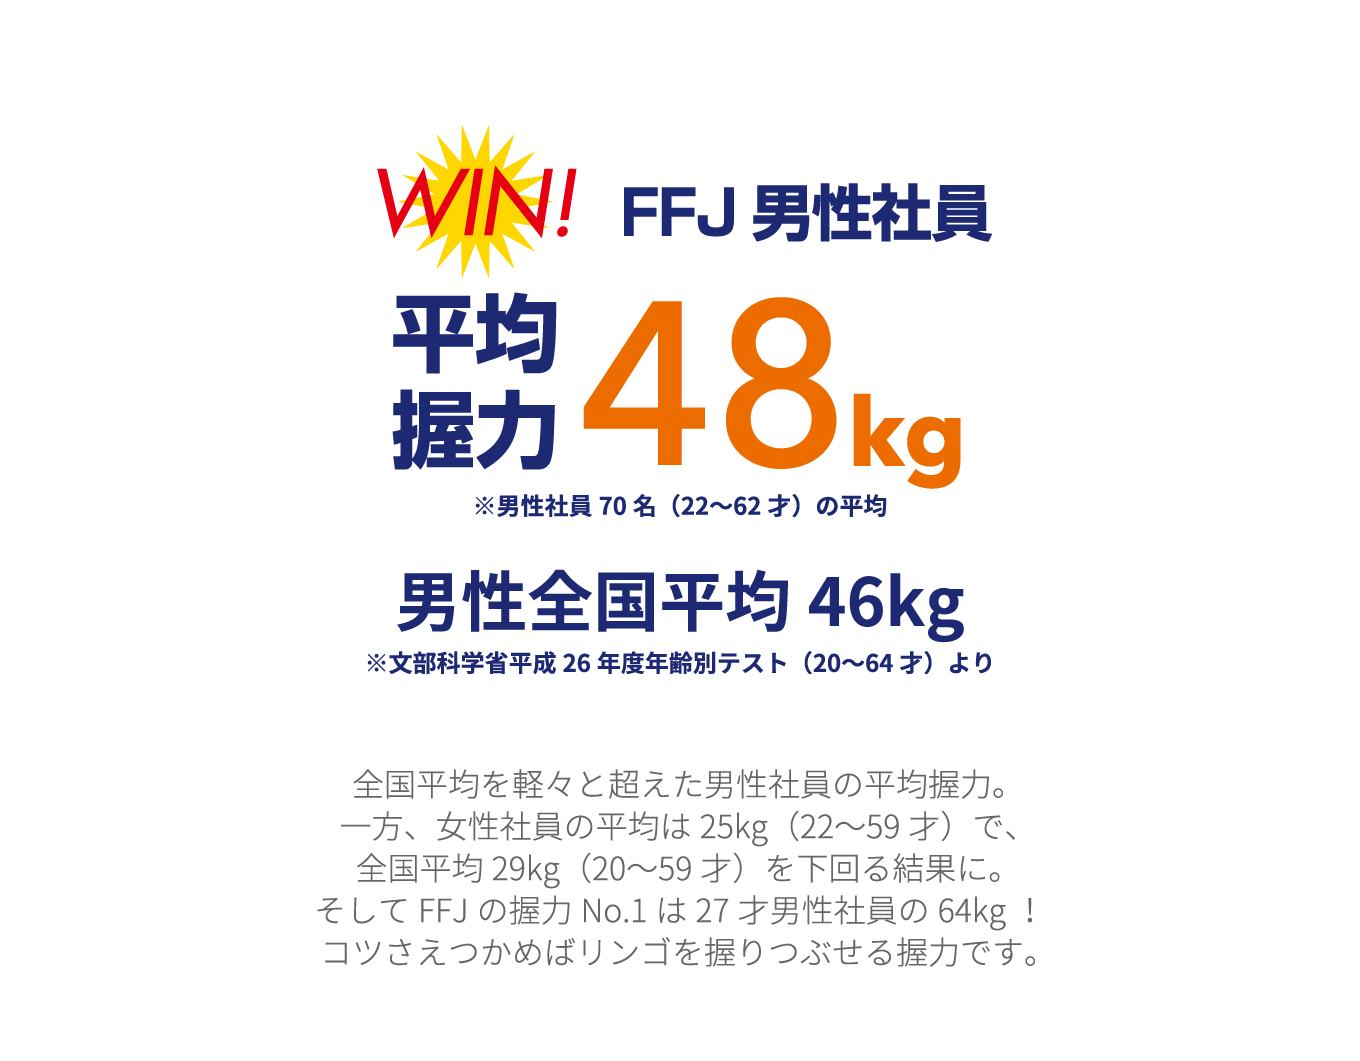 WIN!FFJ男性社員 平均握力48kg